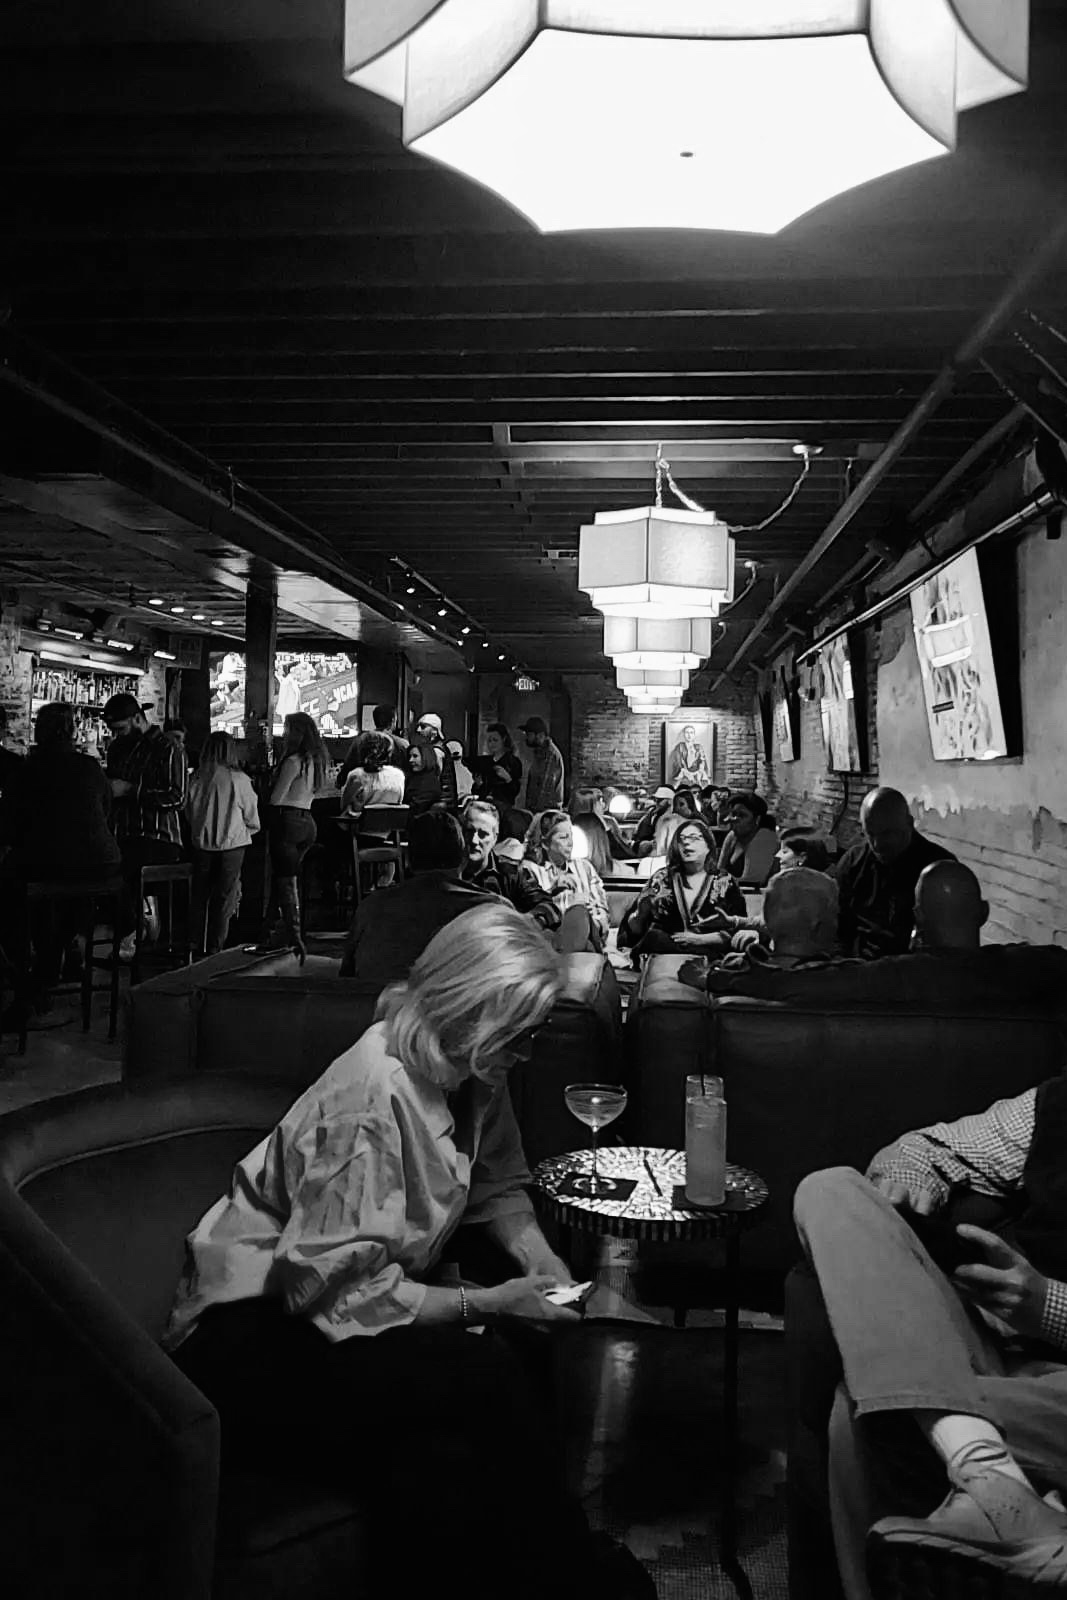 Chuco Underground bar with large group of people enjoying drinks